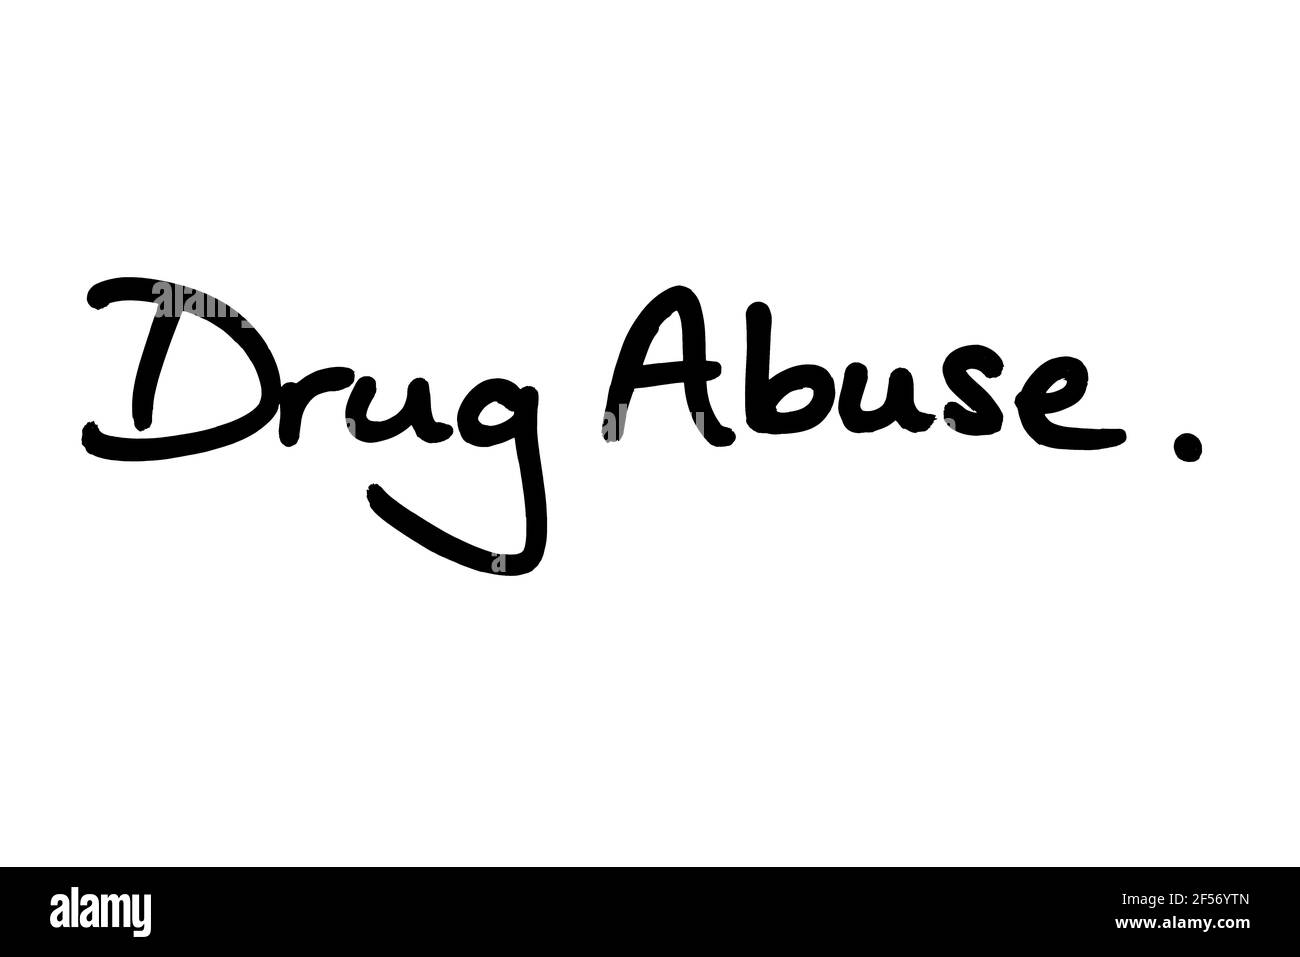 Drug Abuse, handwritten on a white background. Stock Photo